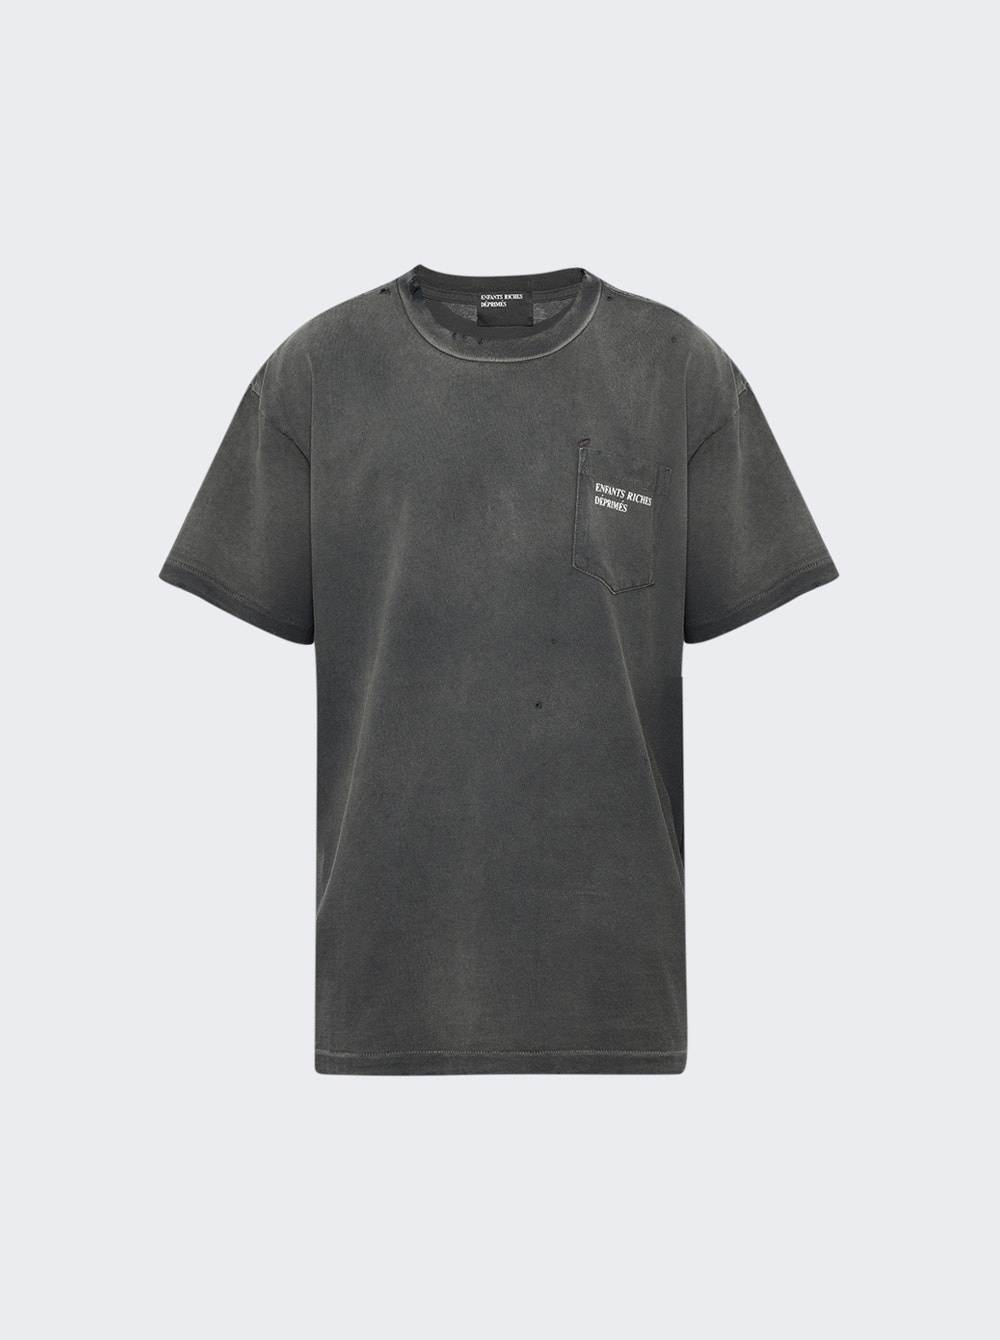 Thrashed Logo Pocket T-Shirt Worn Black and White - 1